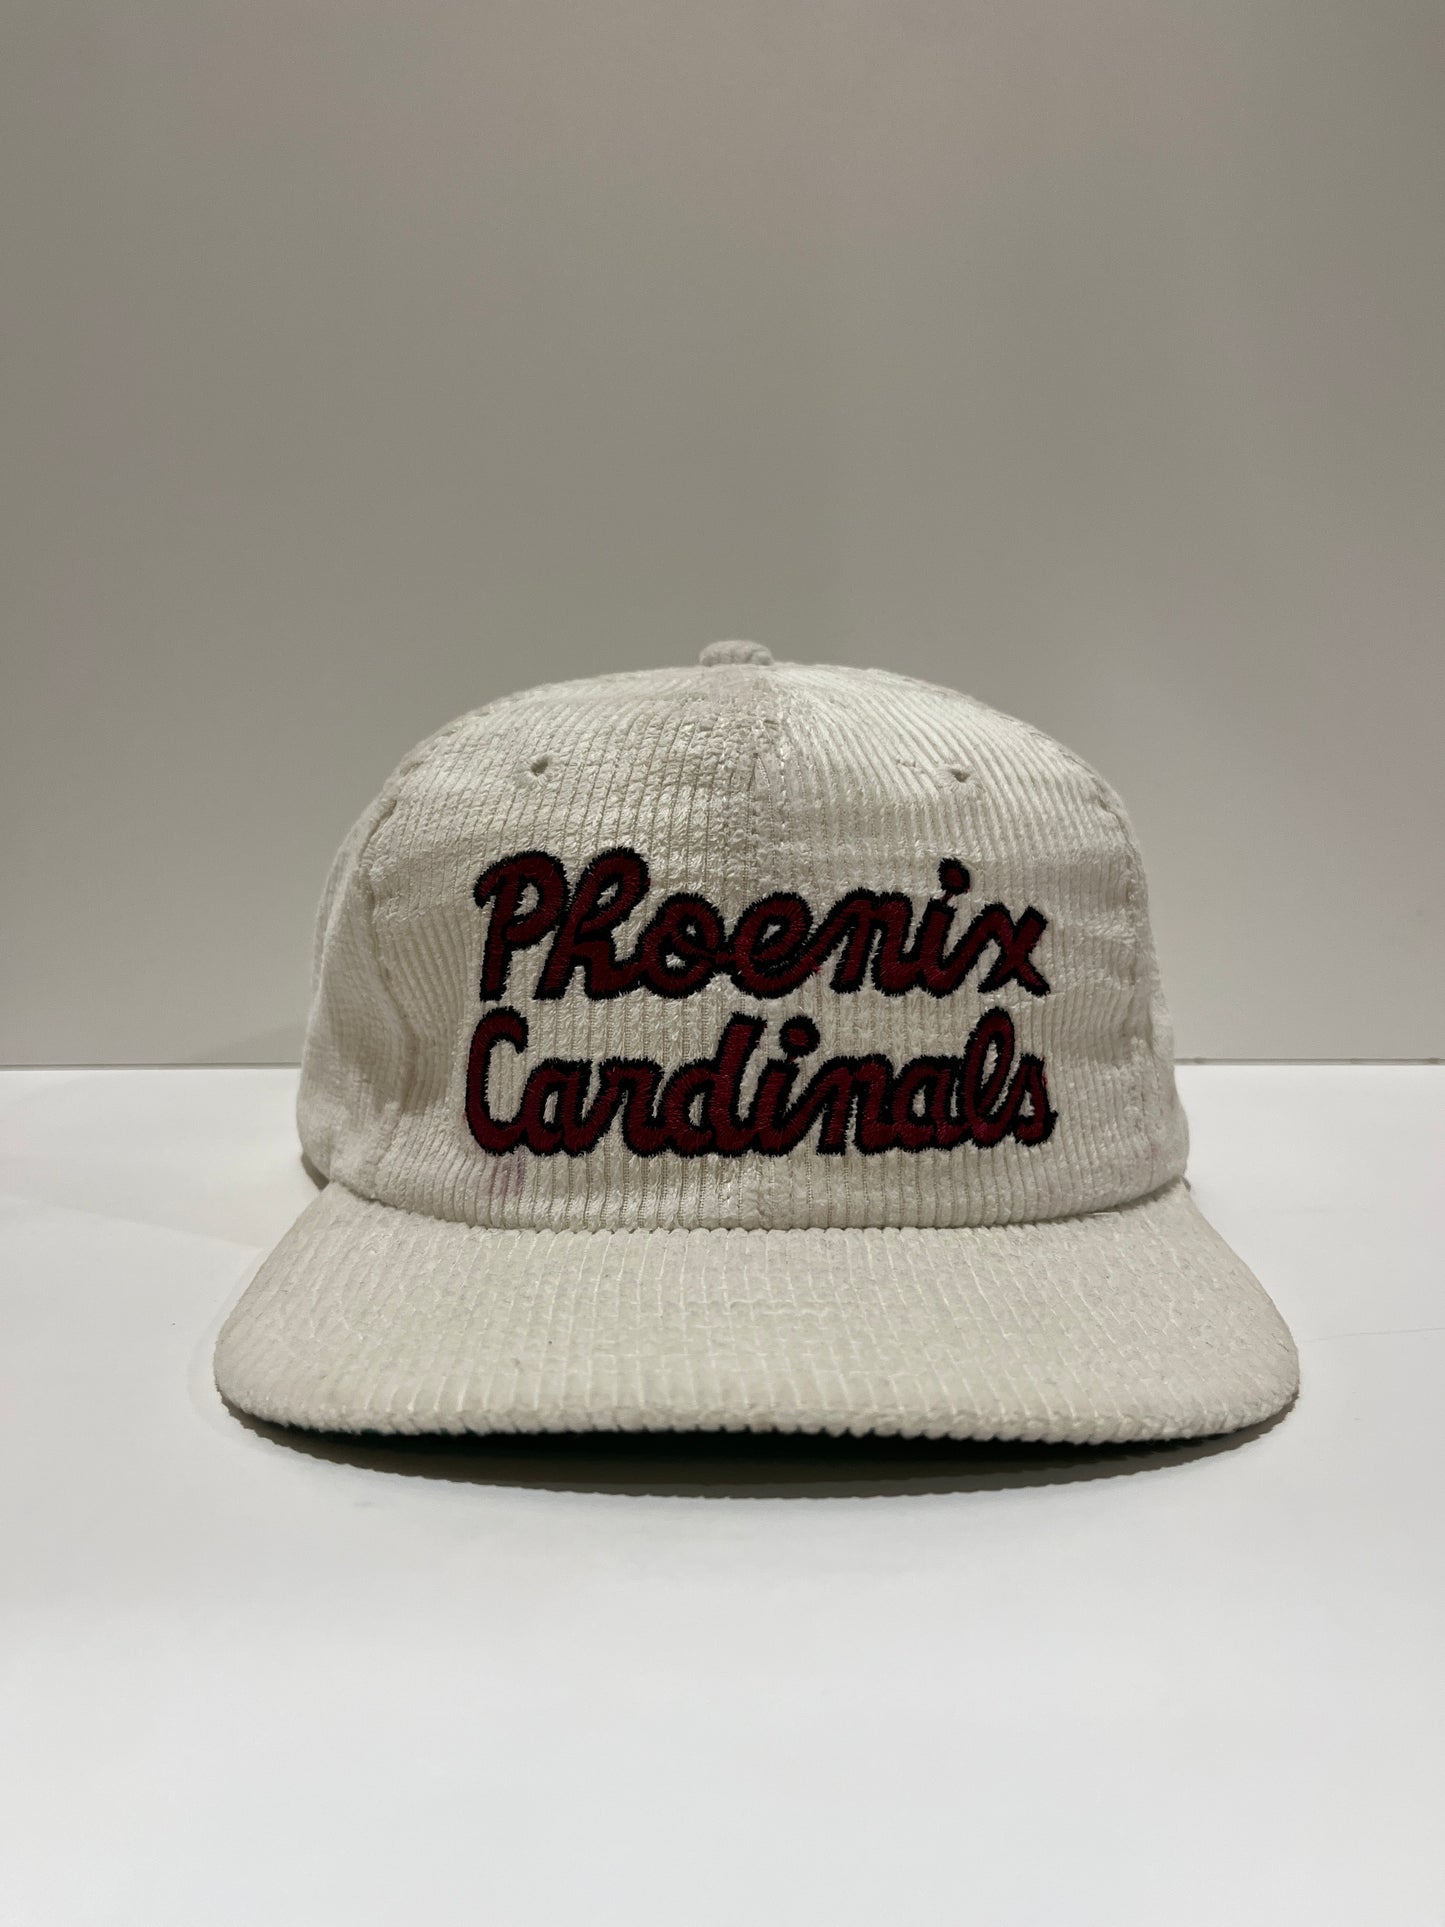 Vintage Starter Phoenix Cardinals Corduroy Snapback Hat